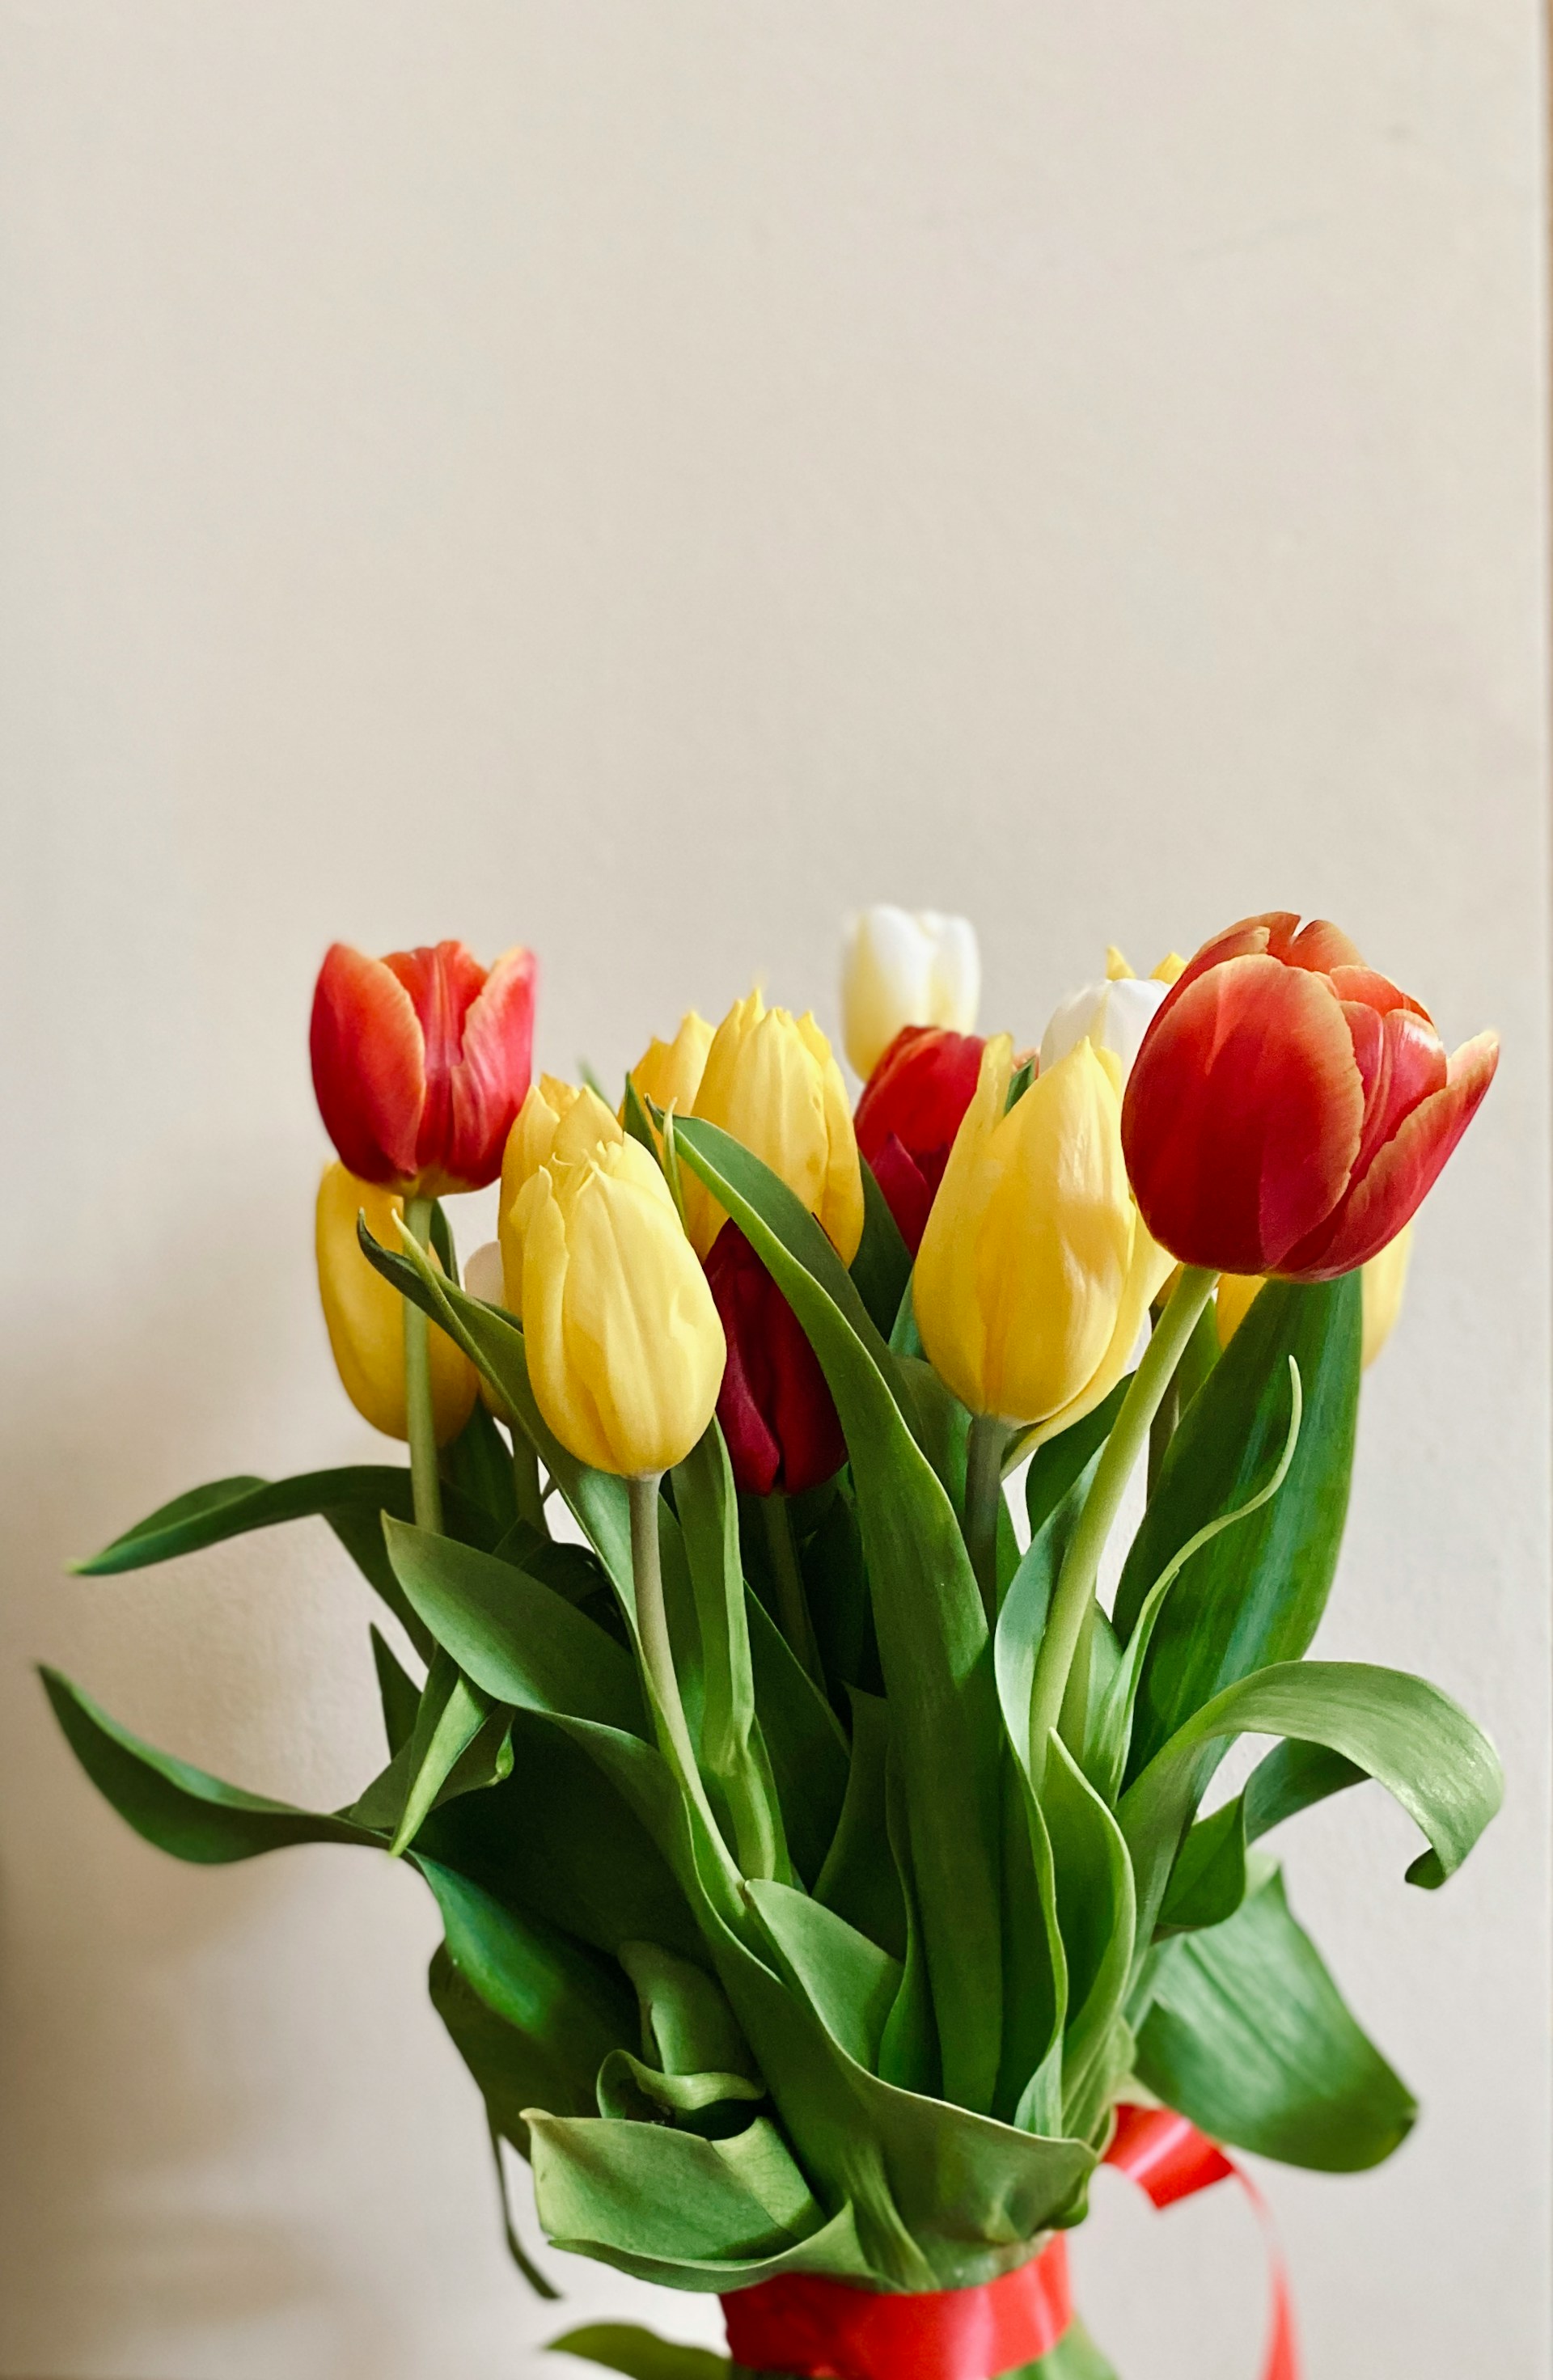 A bouquet of tulips | Source: Unsplash